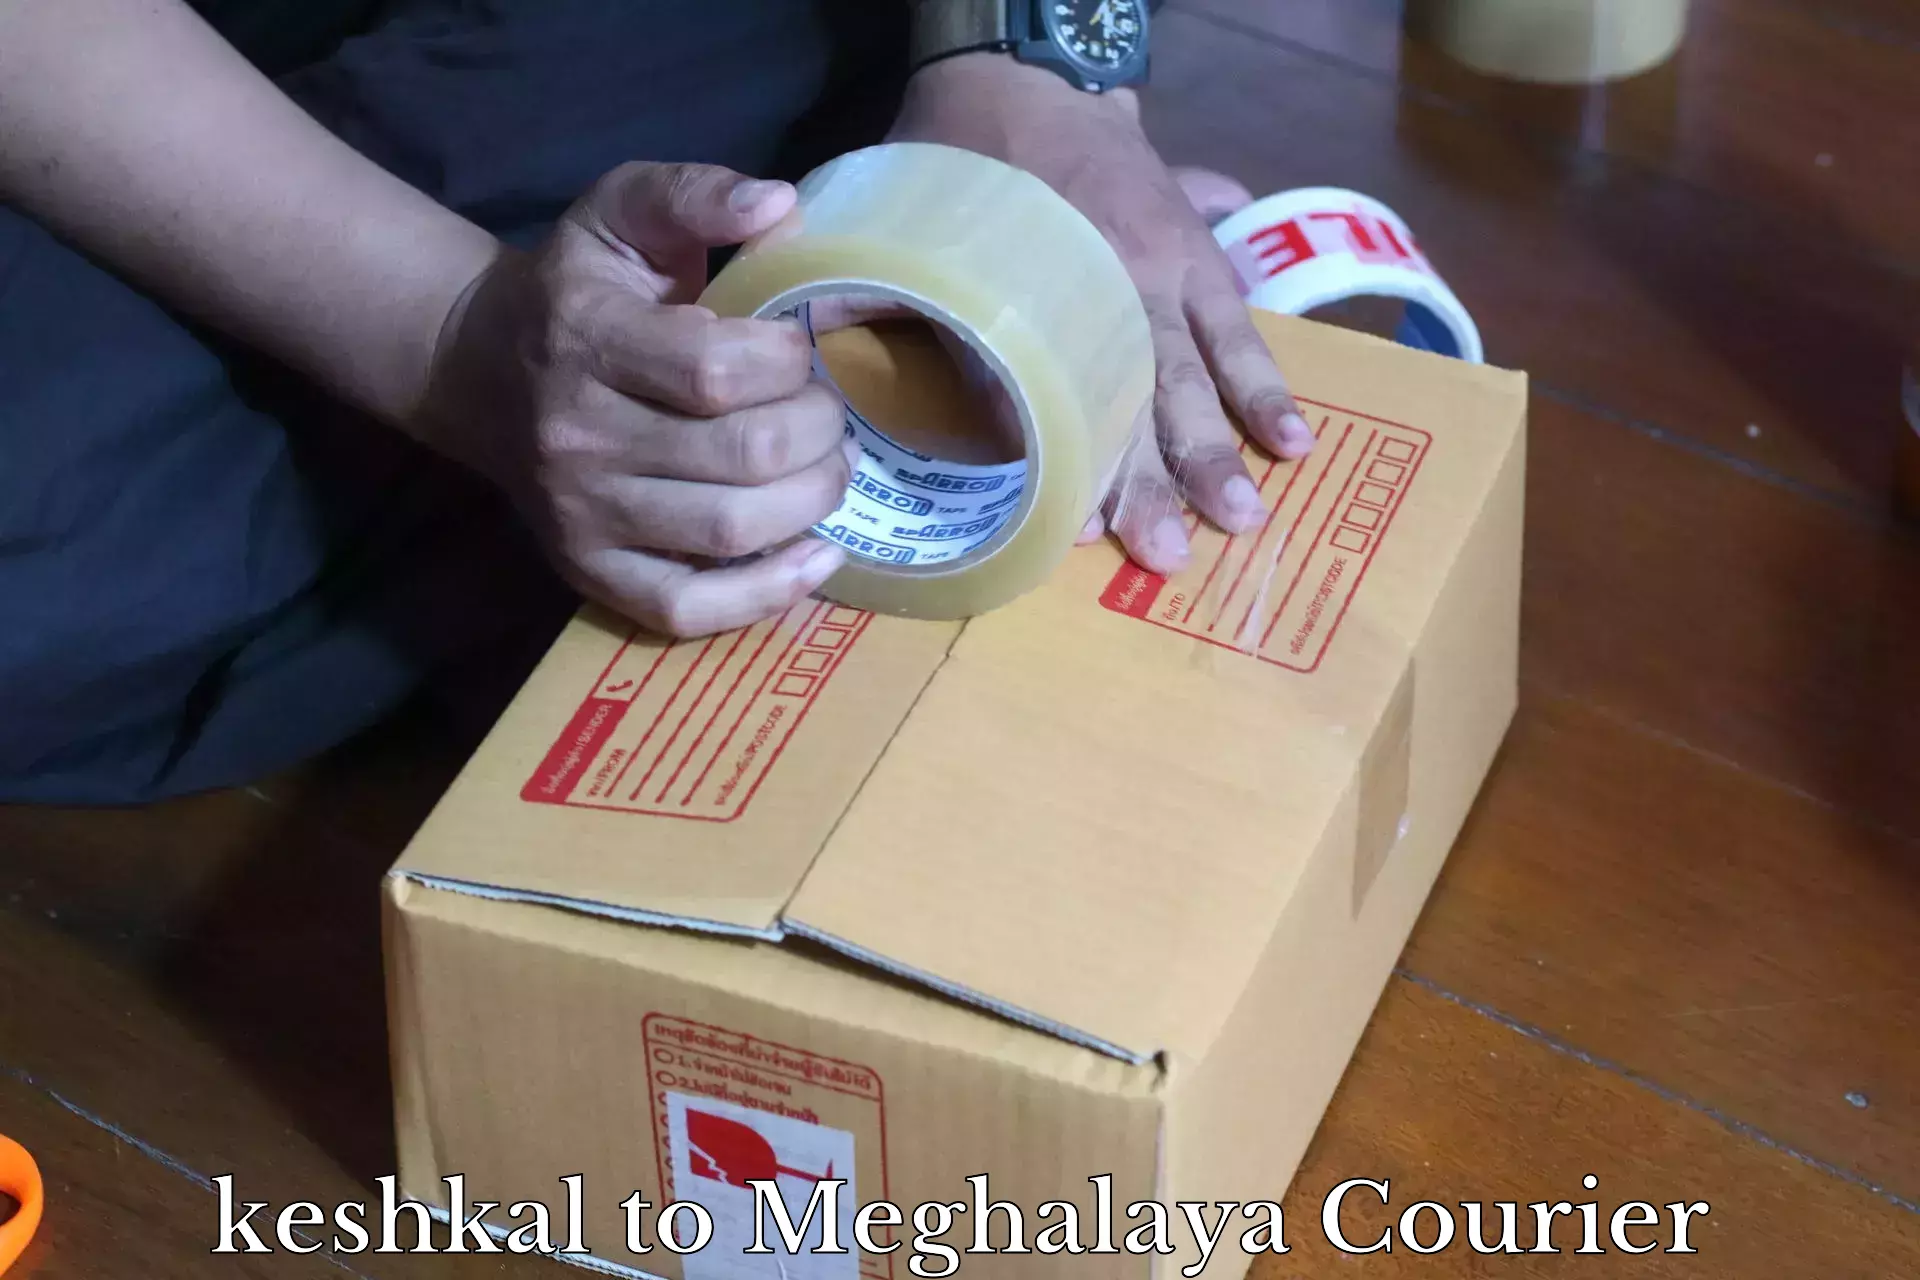 Courier service partnerships keshkal to Meghalaya